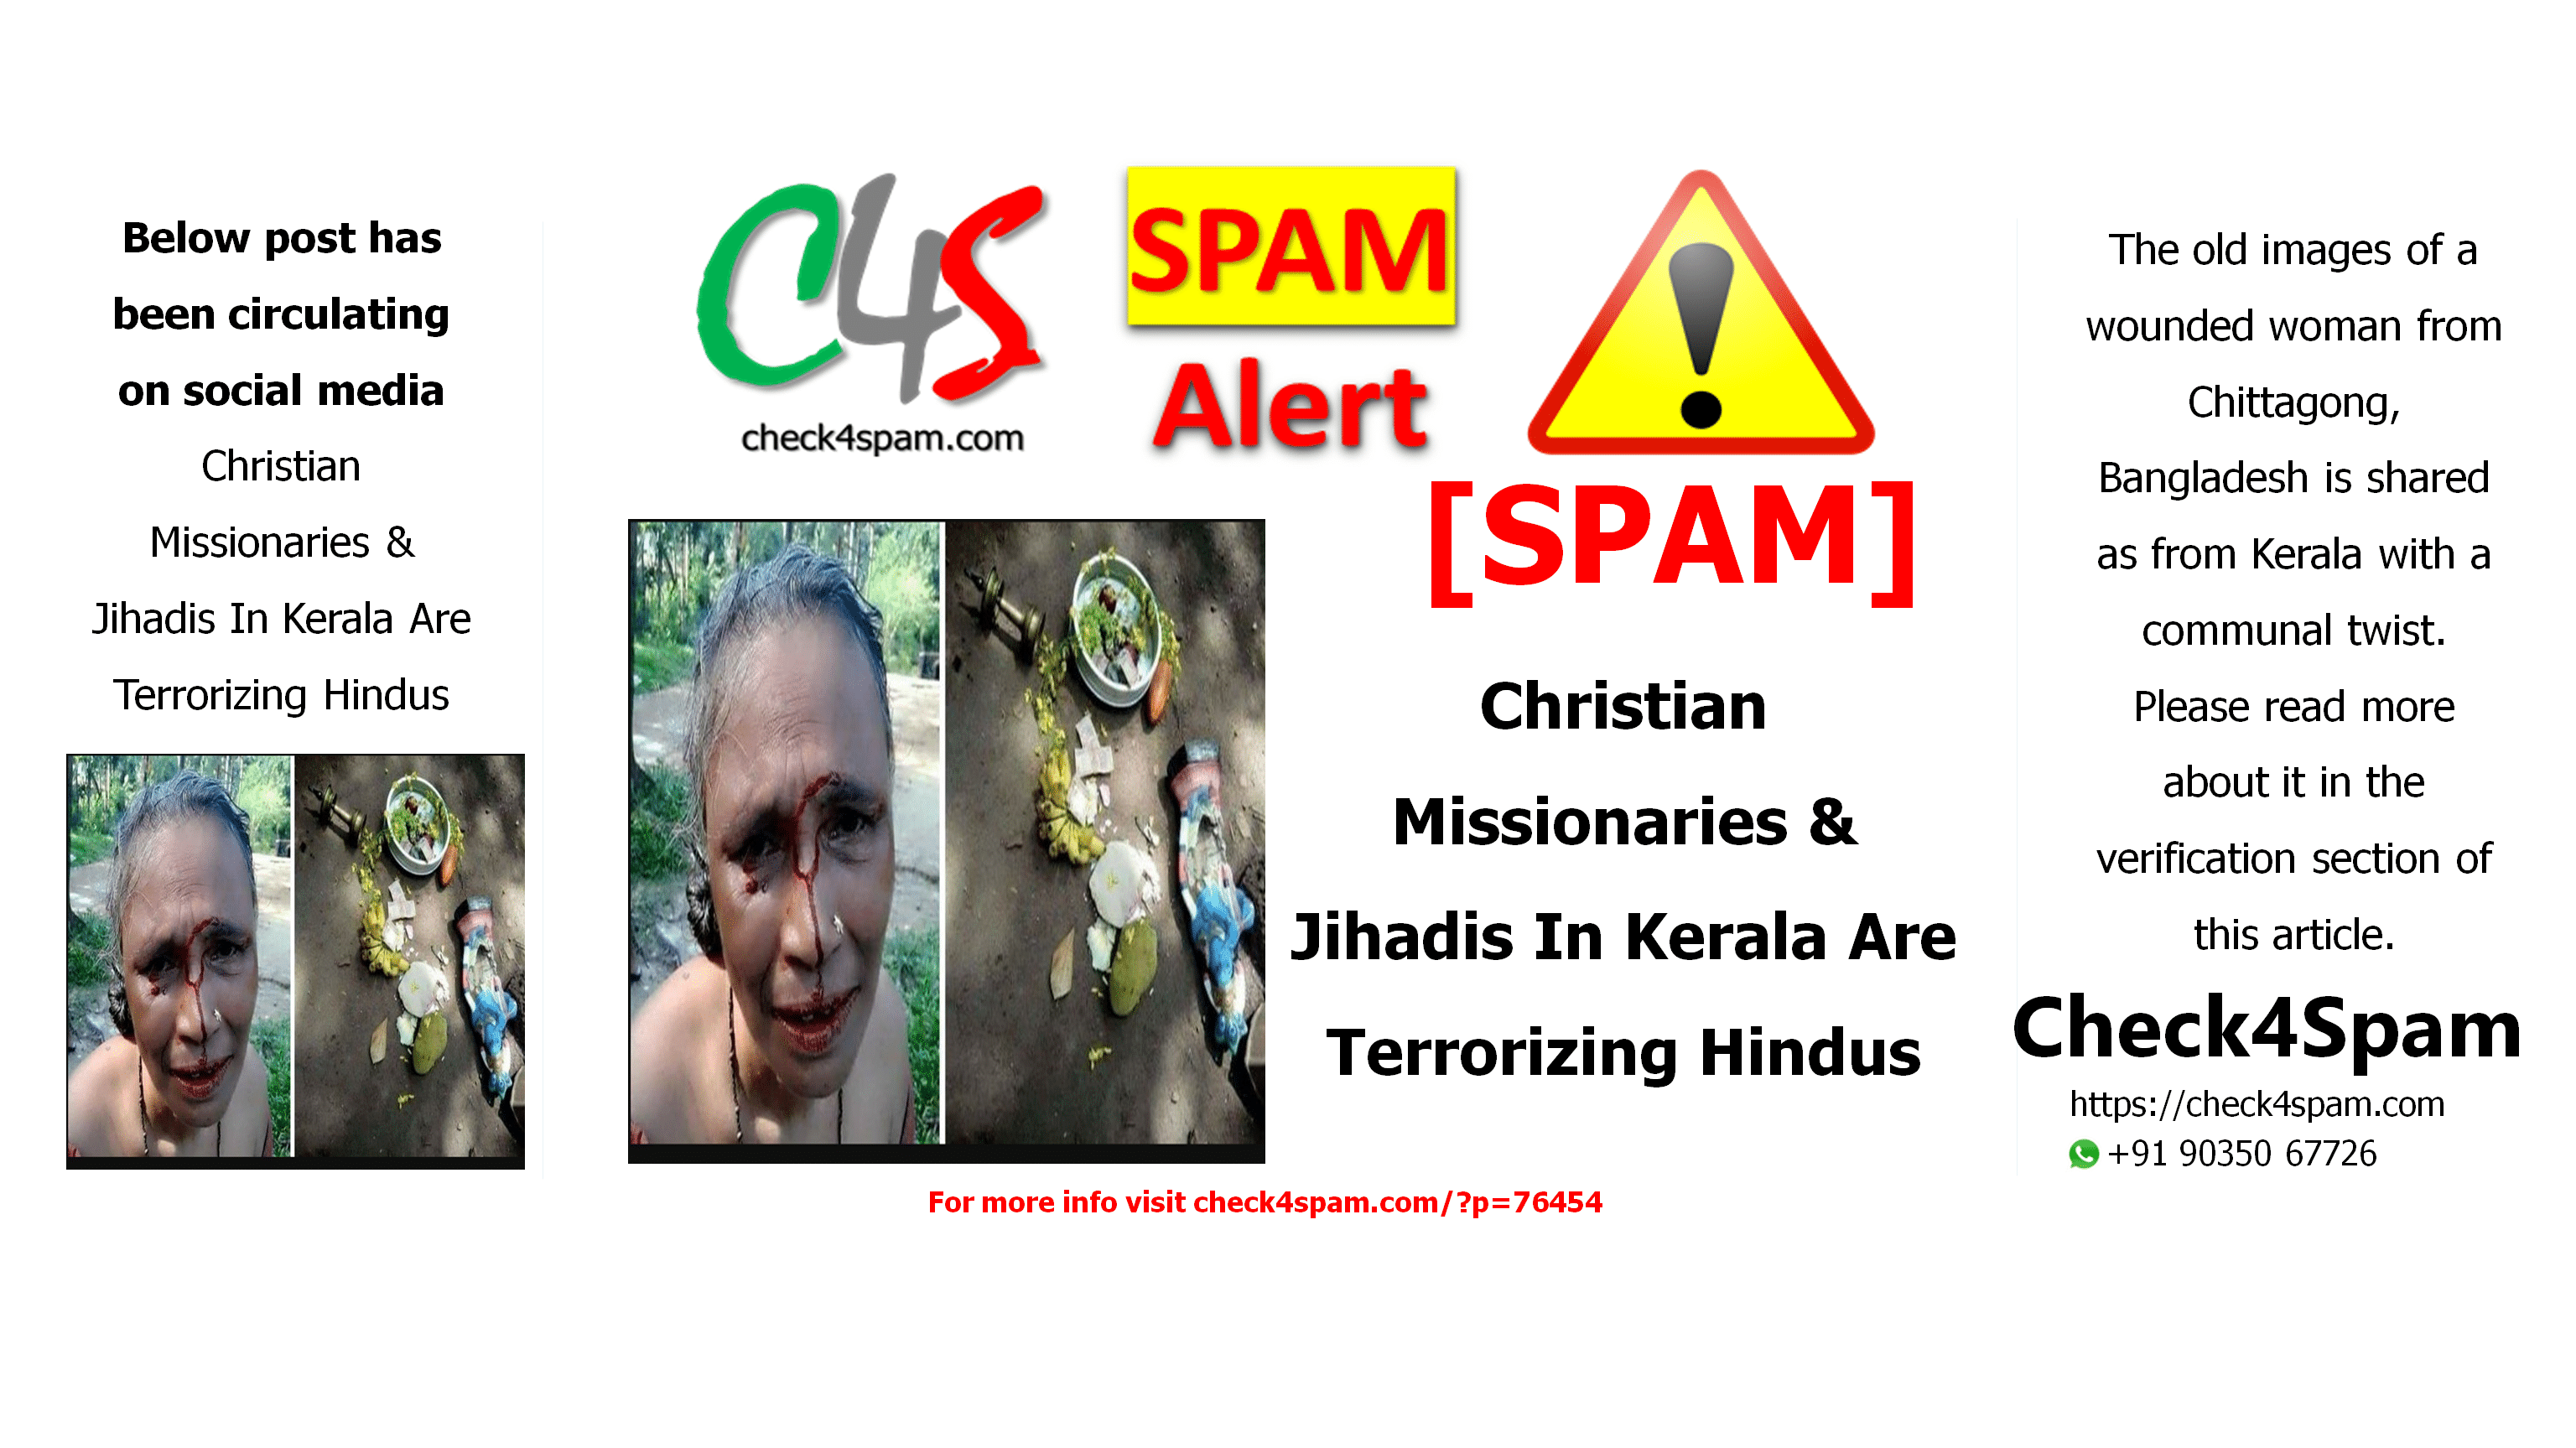 Christian Missionaries & Jihadis In Kerala Are Terrorizing Hindus